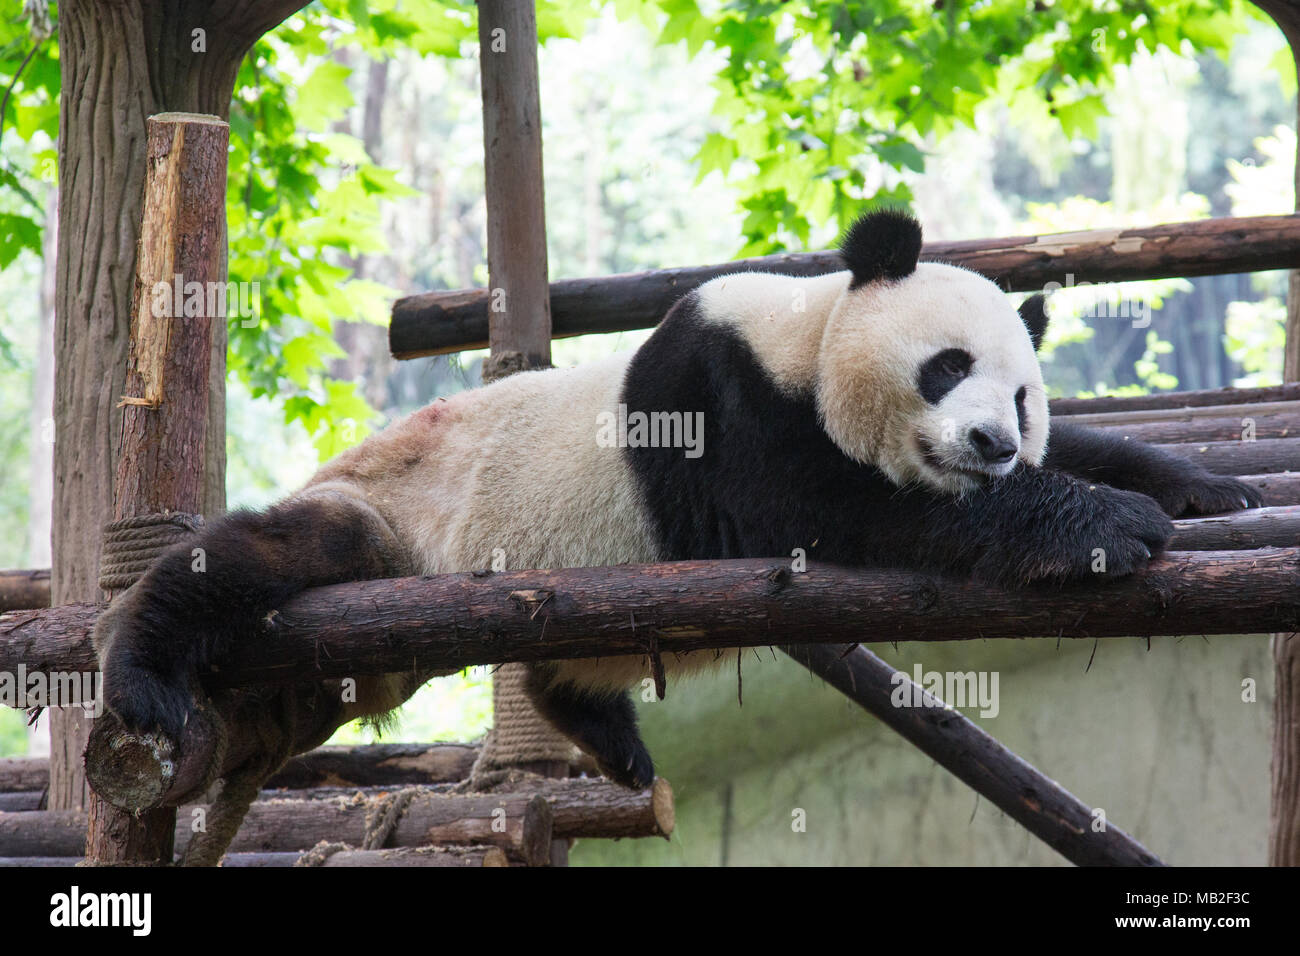 Giant panda eating bamboo grass Stock Photo